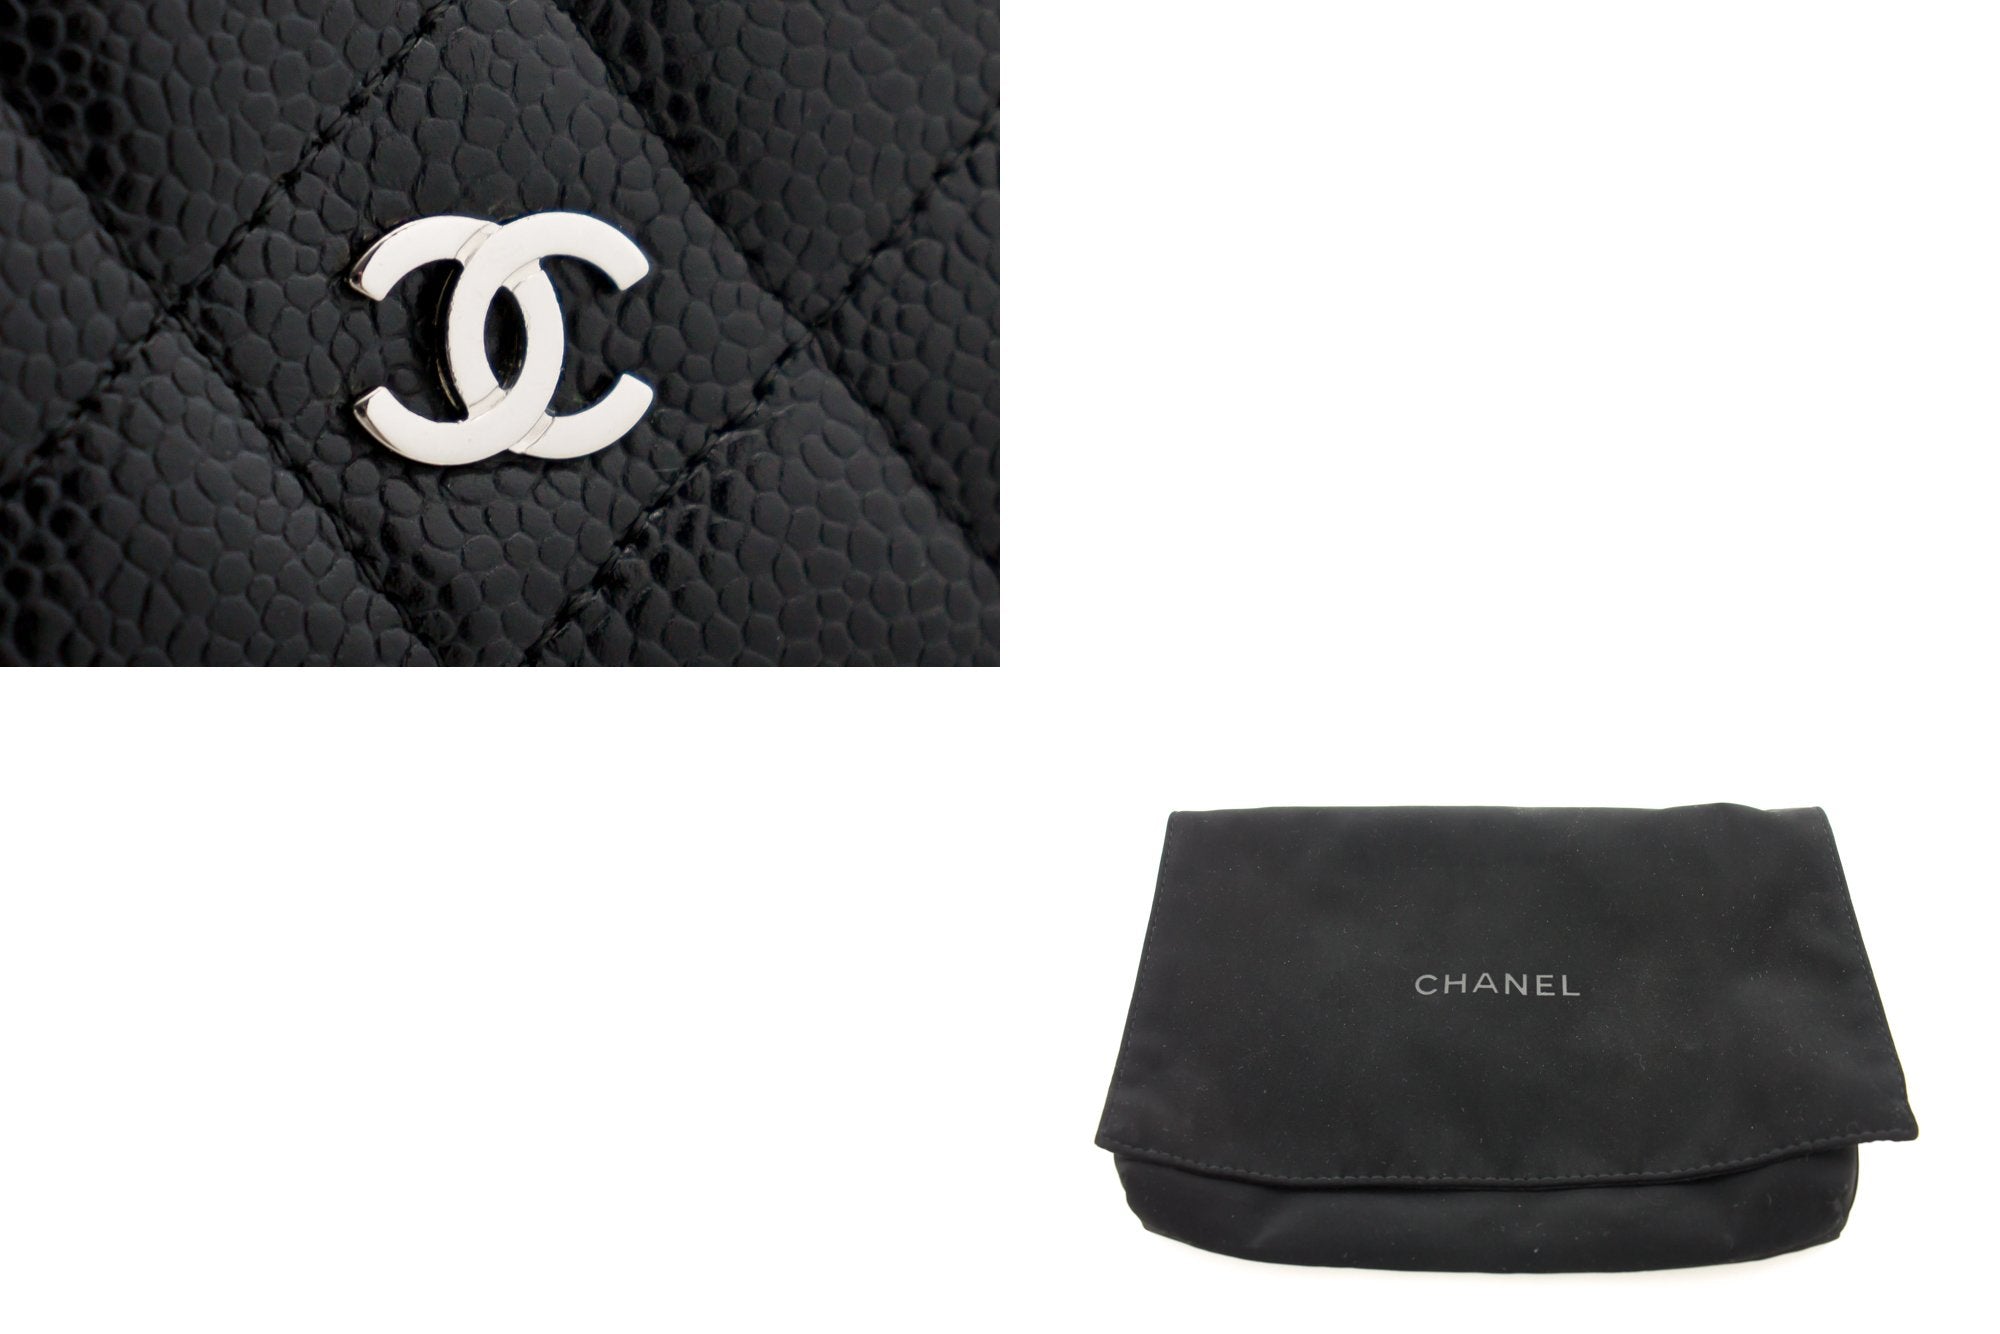 CHANEL Caviar Wallet On Chain WOC Black Shoulder Bag Crossbody i97 -  hannari-shop